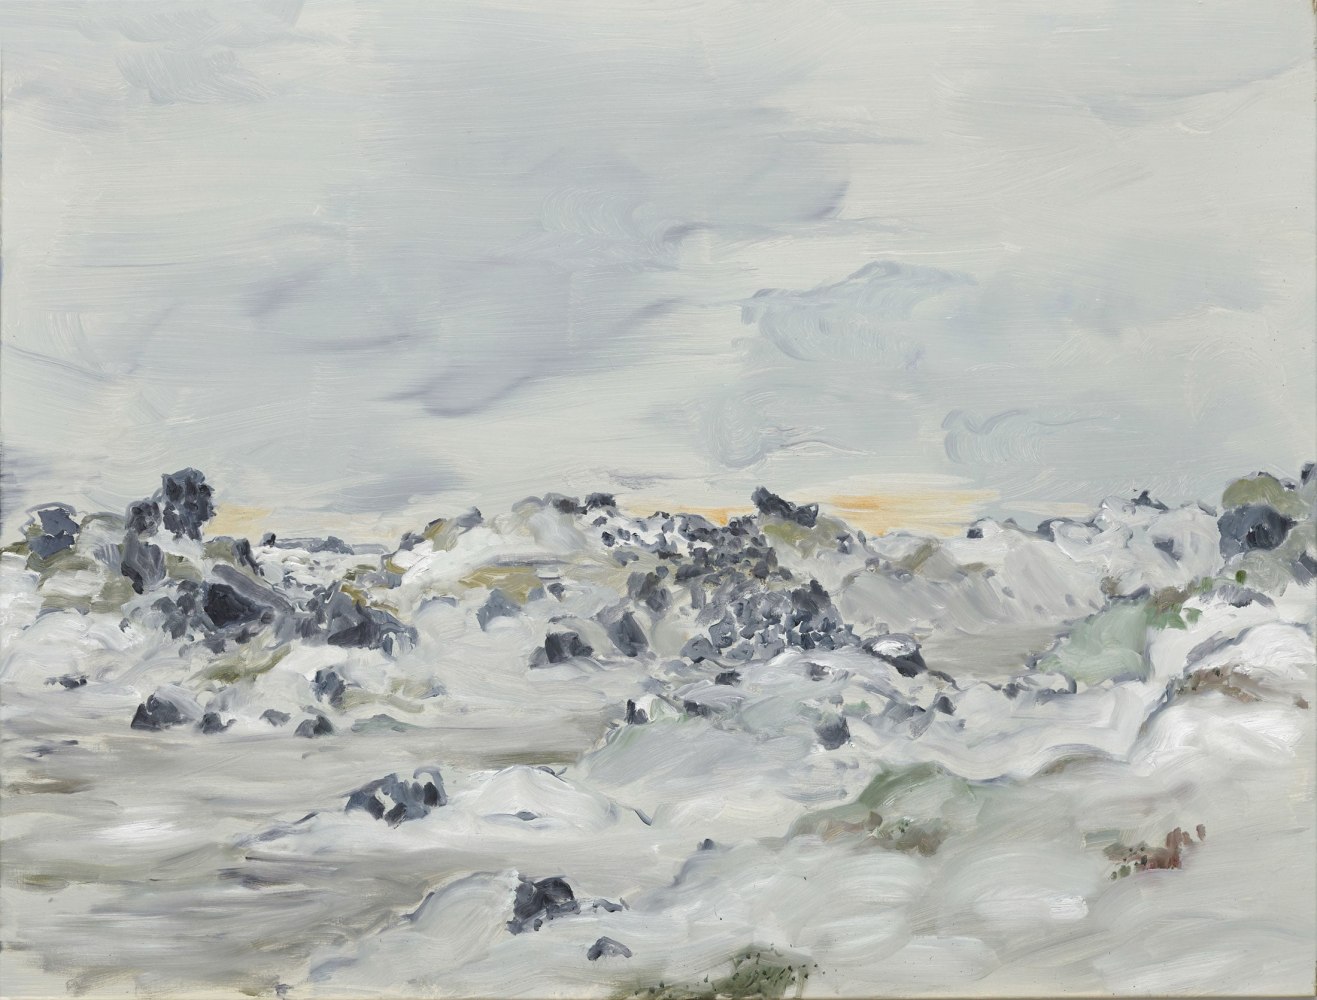 Ragnar Kjartansson
Eldhraun, 2019
Oil on canvas
31 1/2 x 41 3/8 inches
(80 x 105 cm)